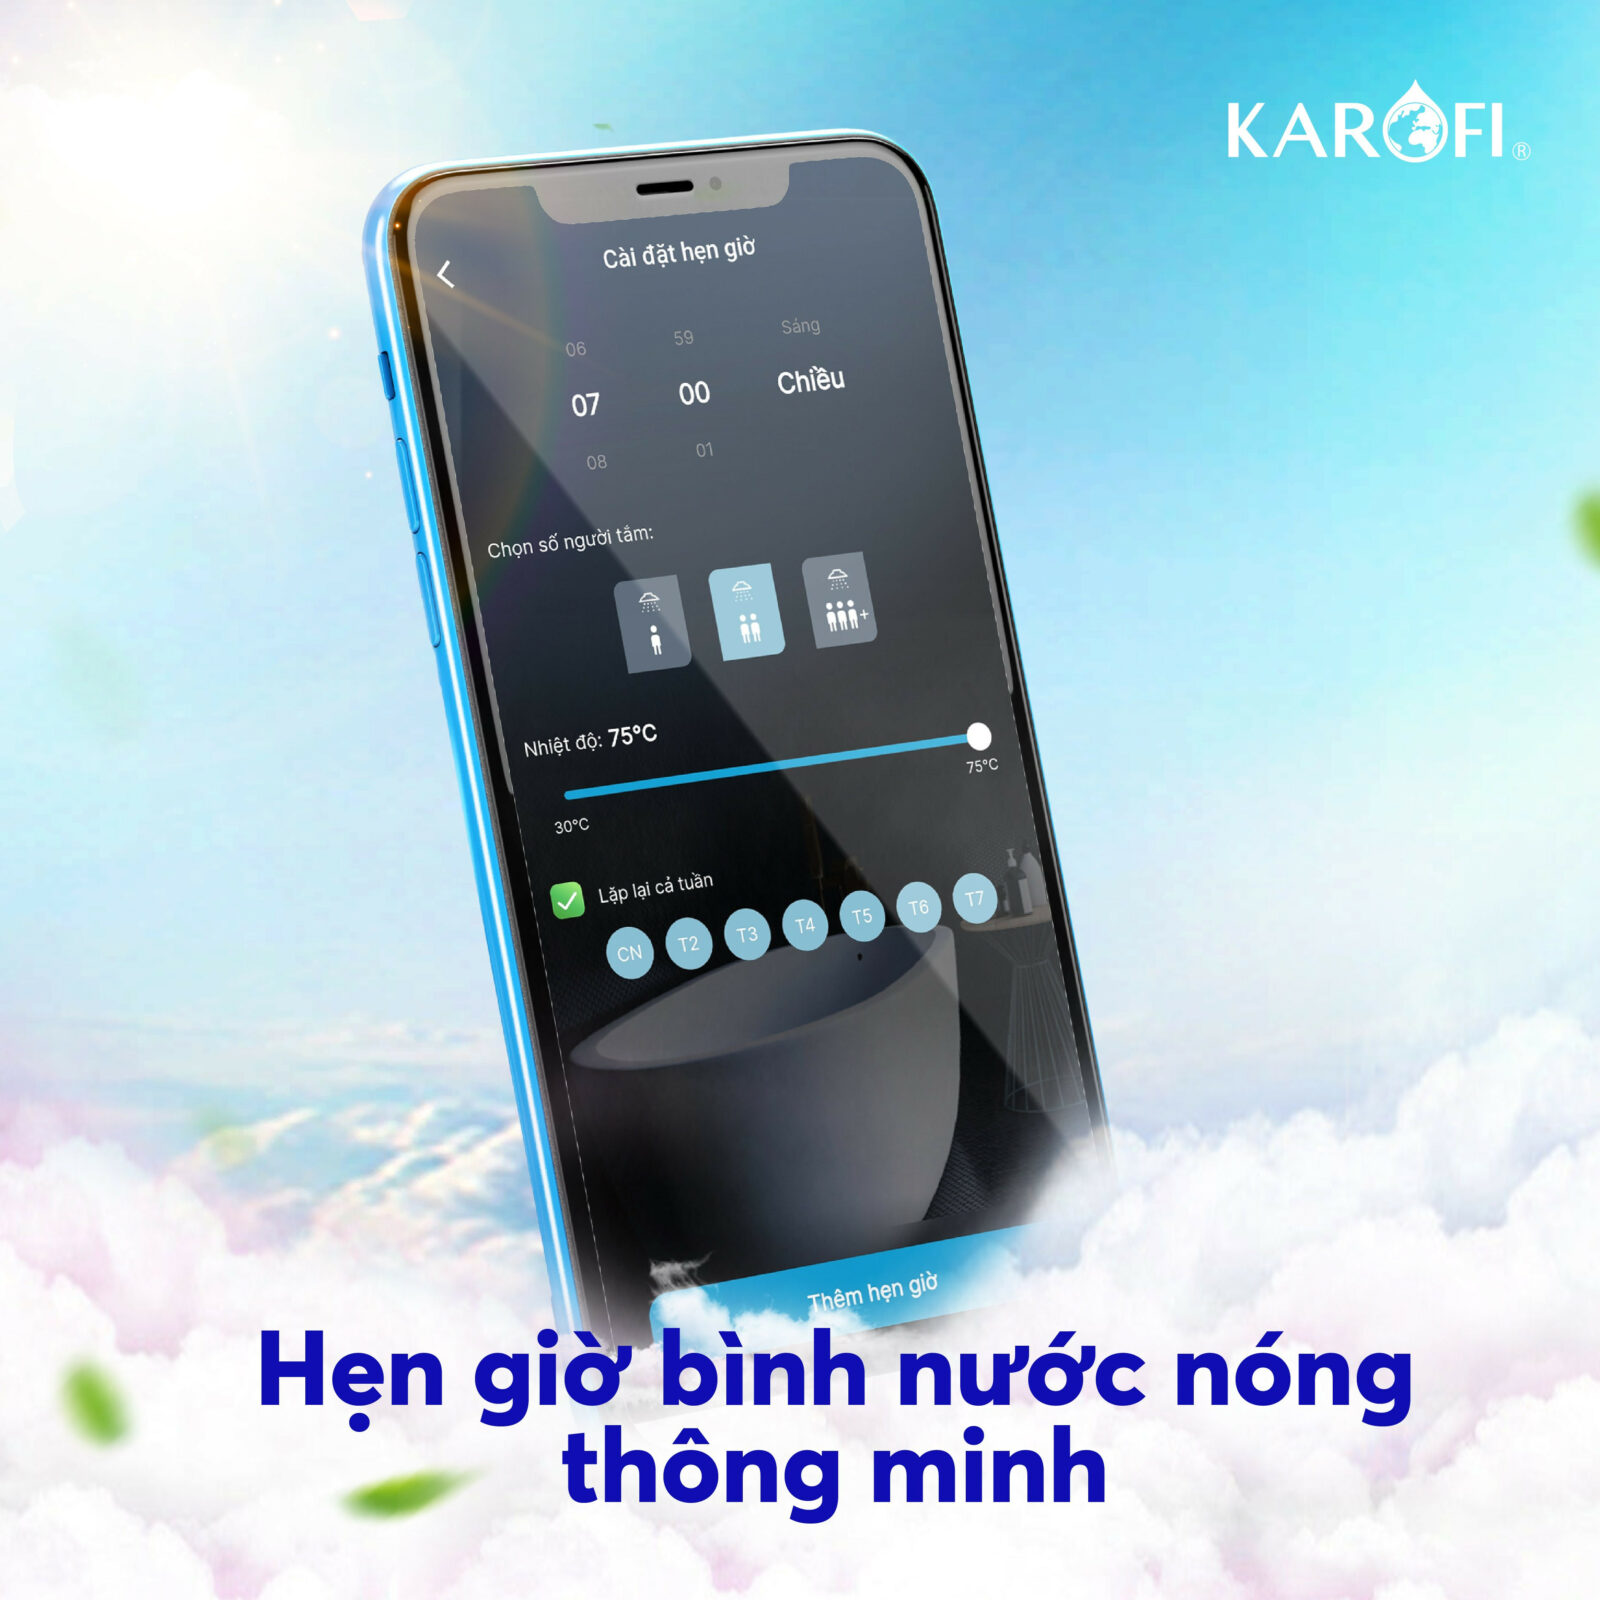 an-tam-song-khoe-kiem-soat-chat-luong-nuoc-va-khi-tren-app-karofi-365-thong-minh-6